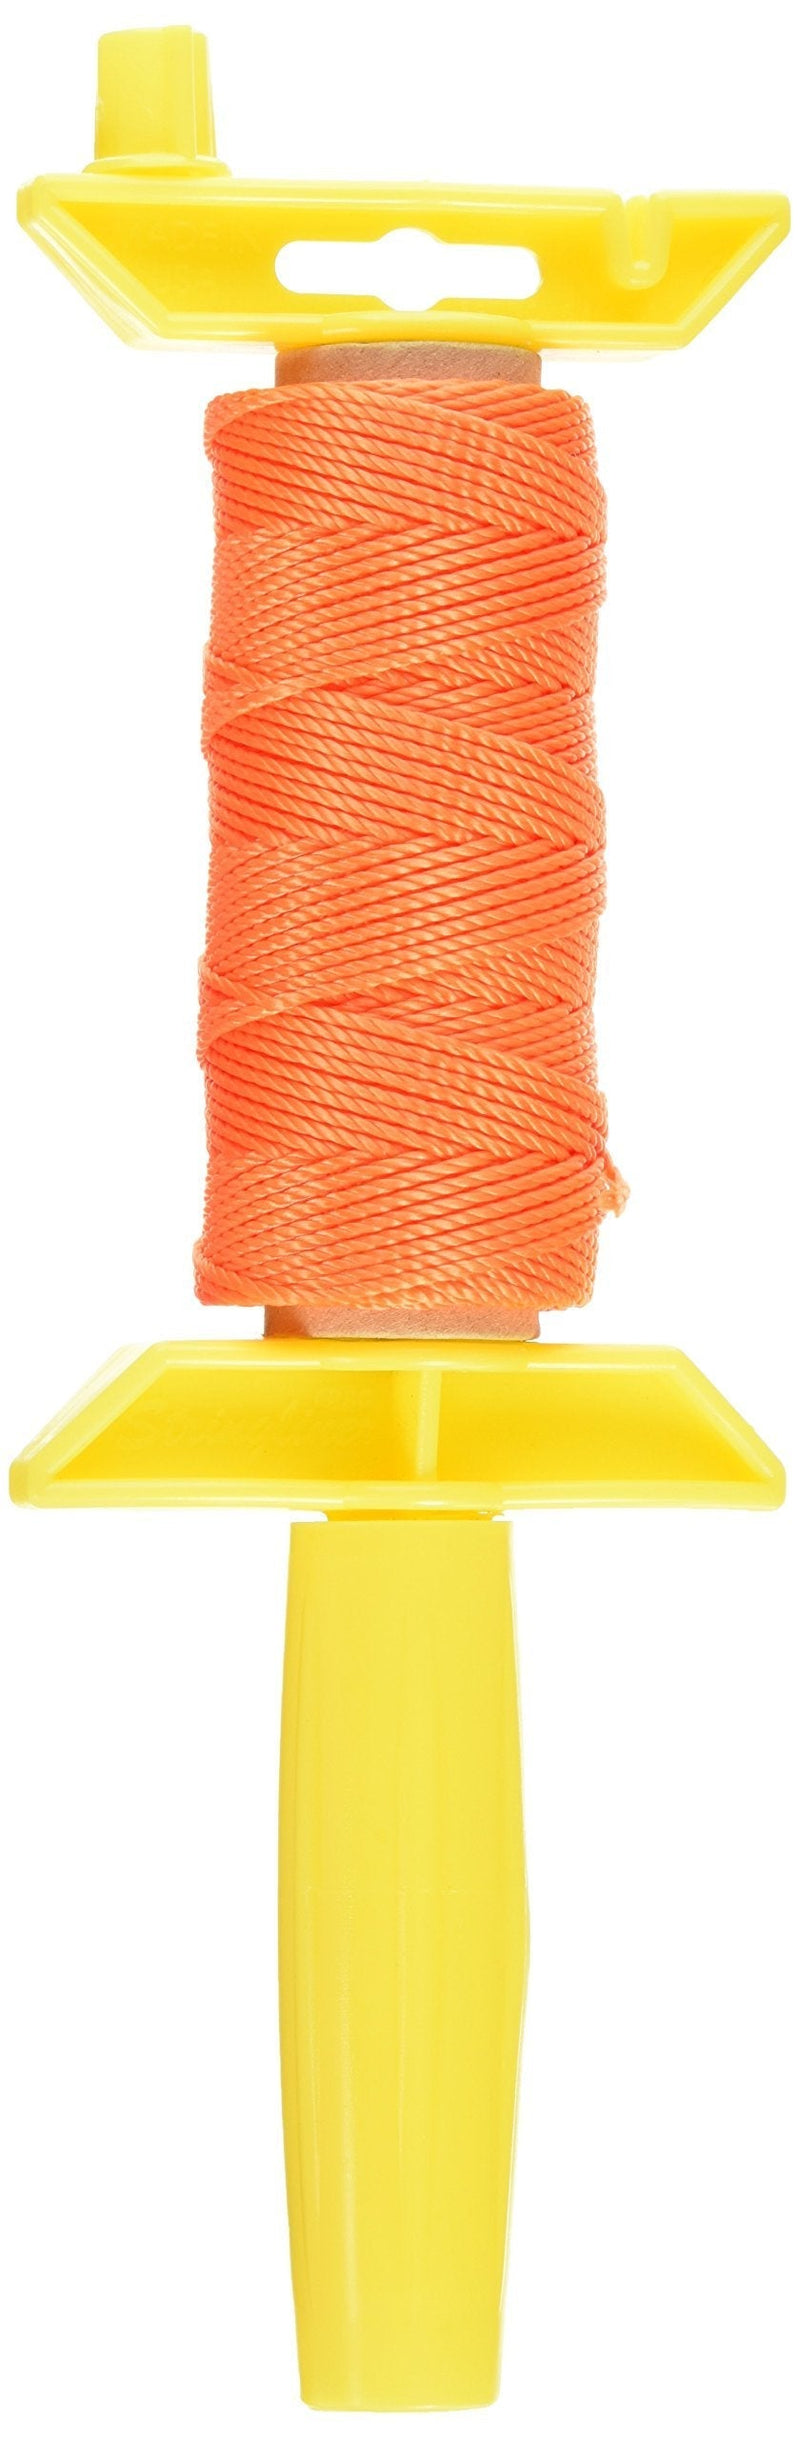 STRINGLINER Company 25006 Twisted 135-Feet Reloadable Line Reel, Fluorescent Orange 1 - NewNest Australia